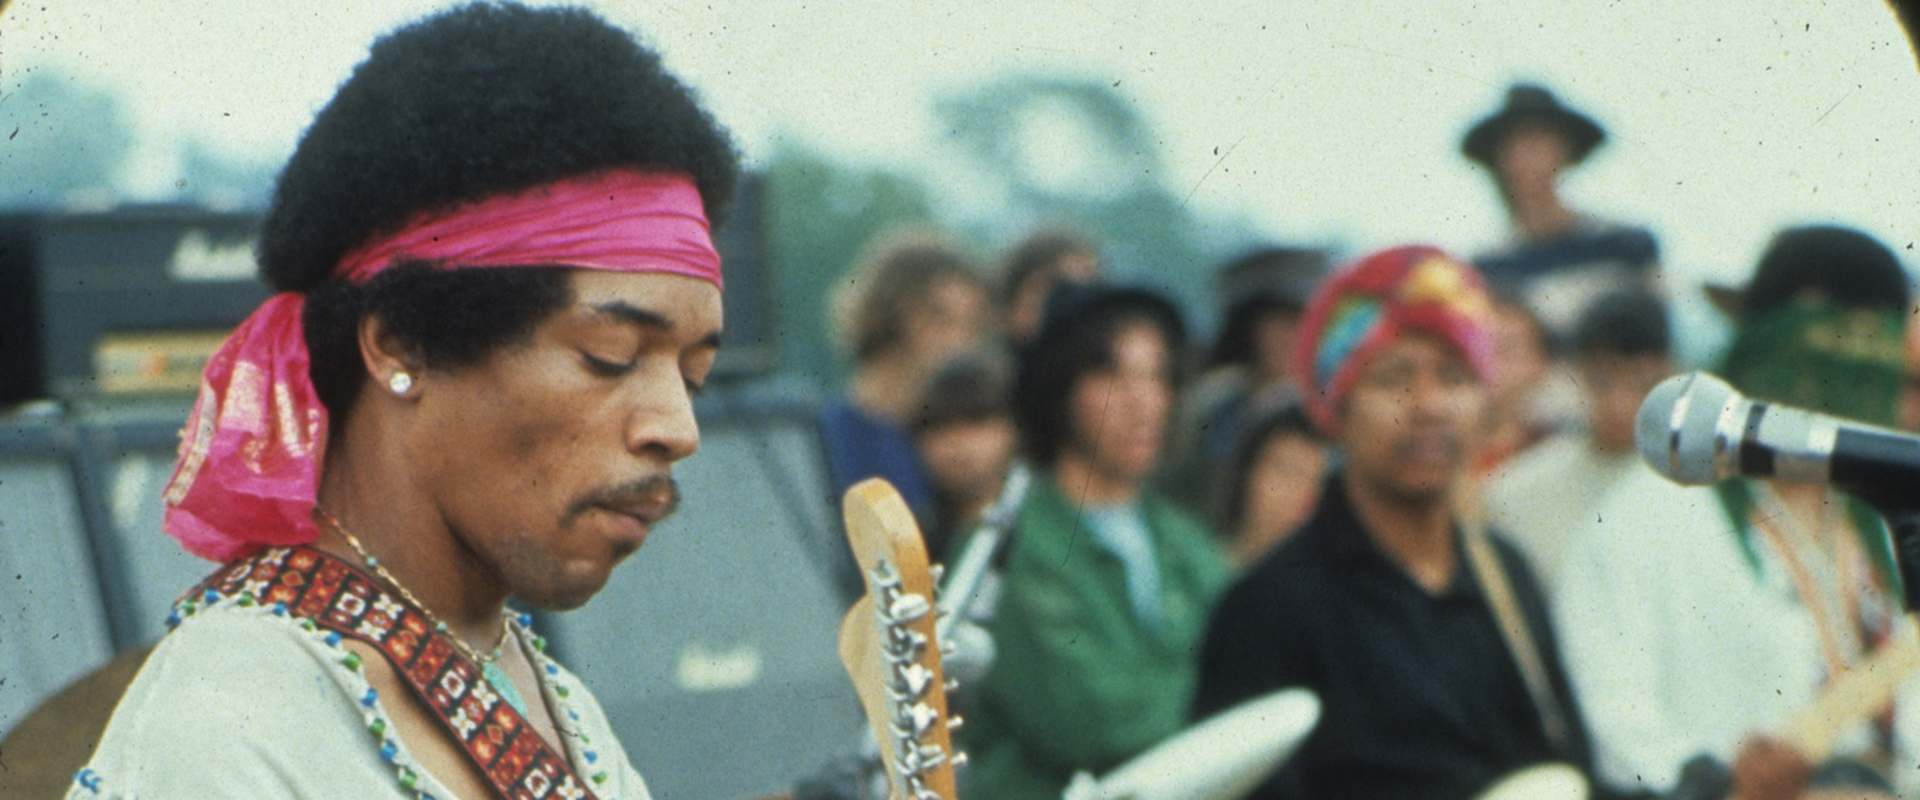 Woodstock background 1